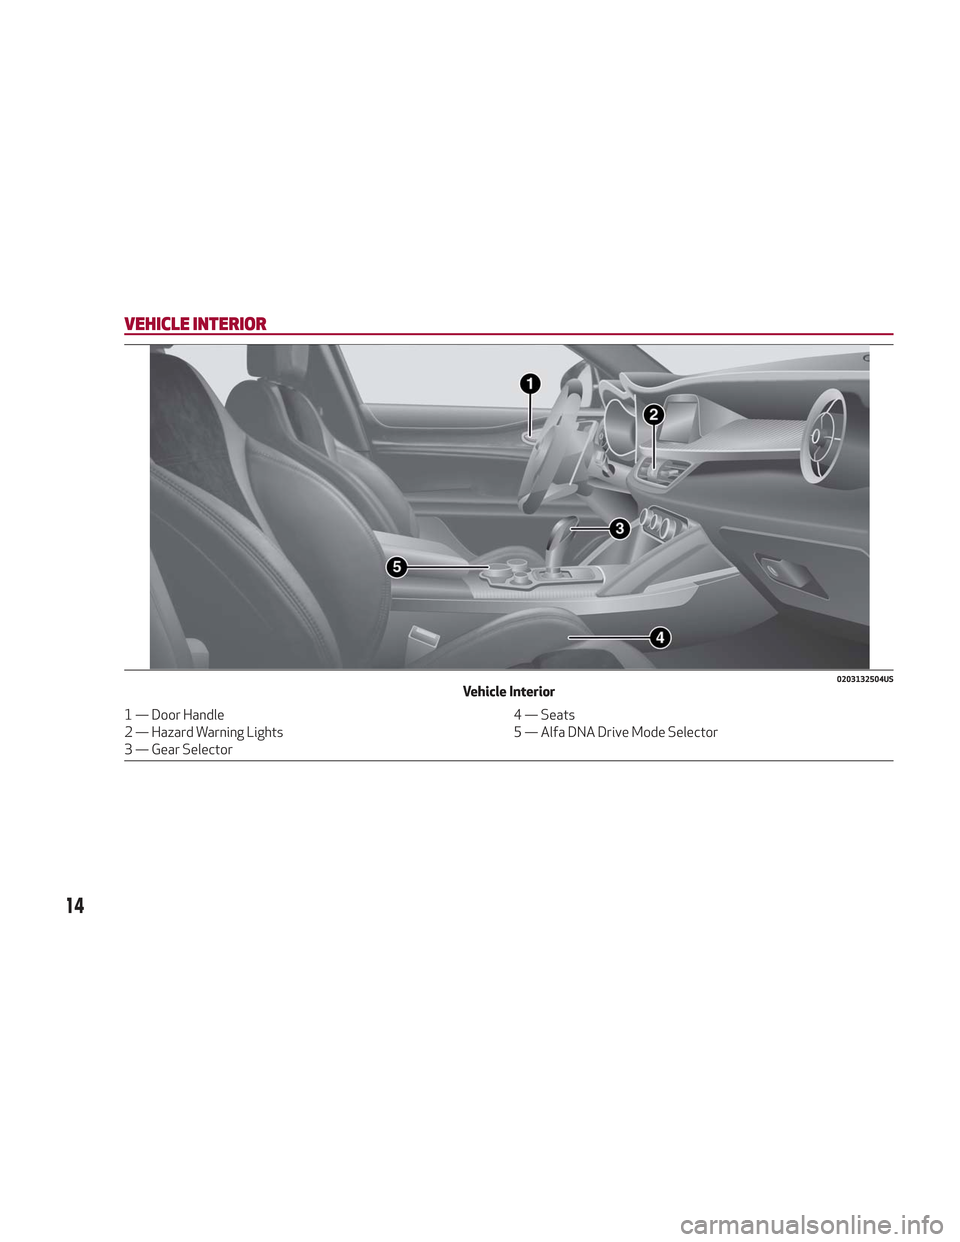 Alfa Romeo Stelvio 2018 User Guide VEHICLE INTERIOR
0203132504USVehicle Interior
1 — Door Handle4 — Seats
2 — Hazard Warning Lights 5 — Alfa DNA Drive Mode Selector
3 — Gear Selector
14 